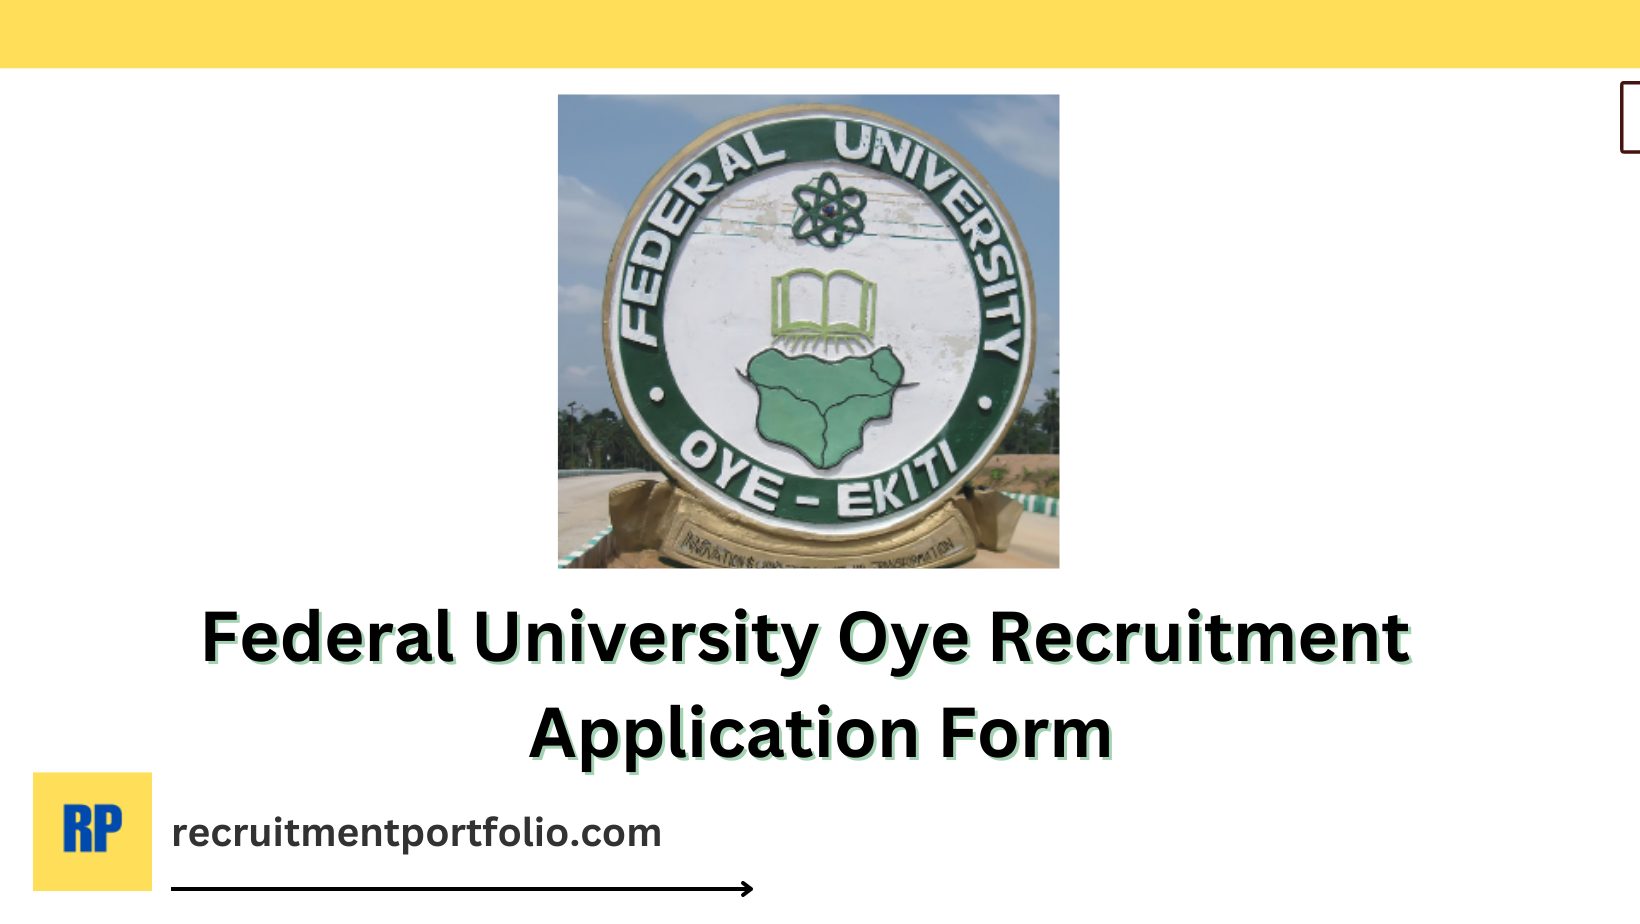 Federal University Oye Recruitment